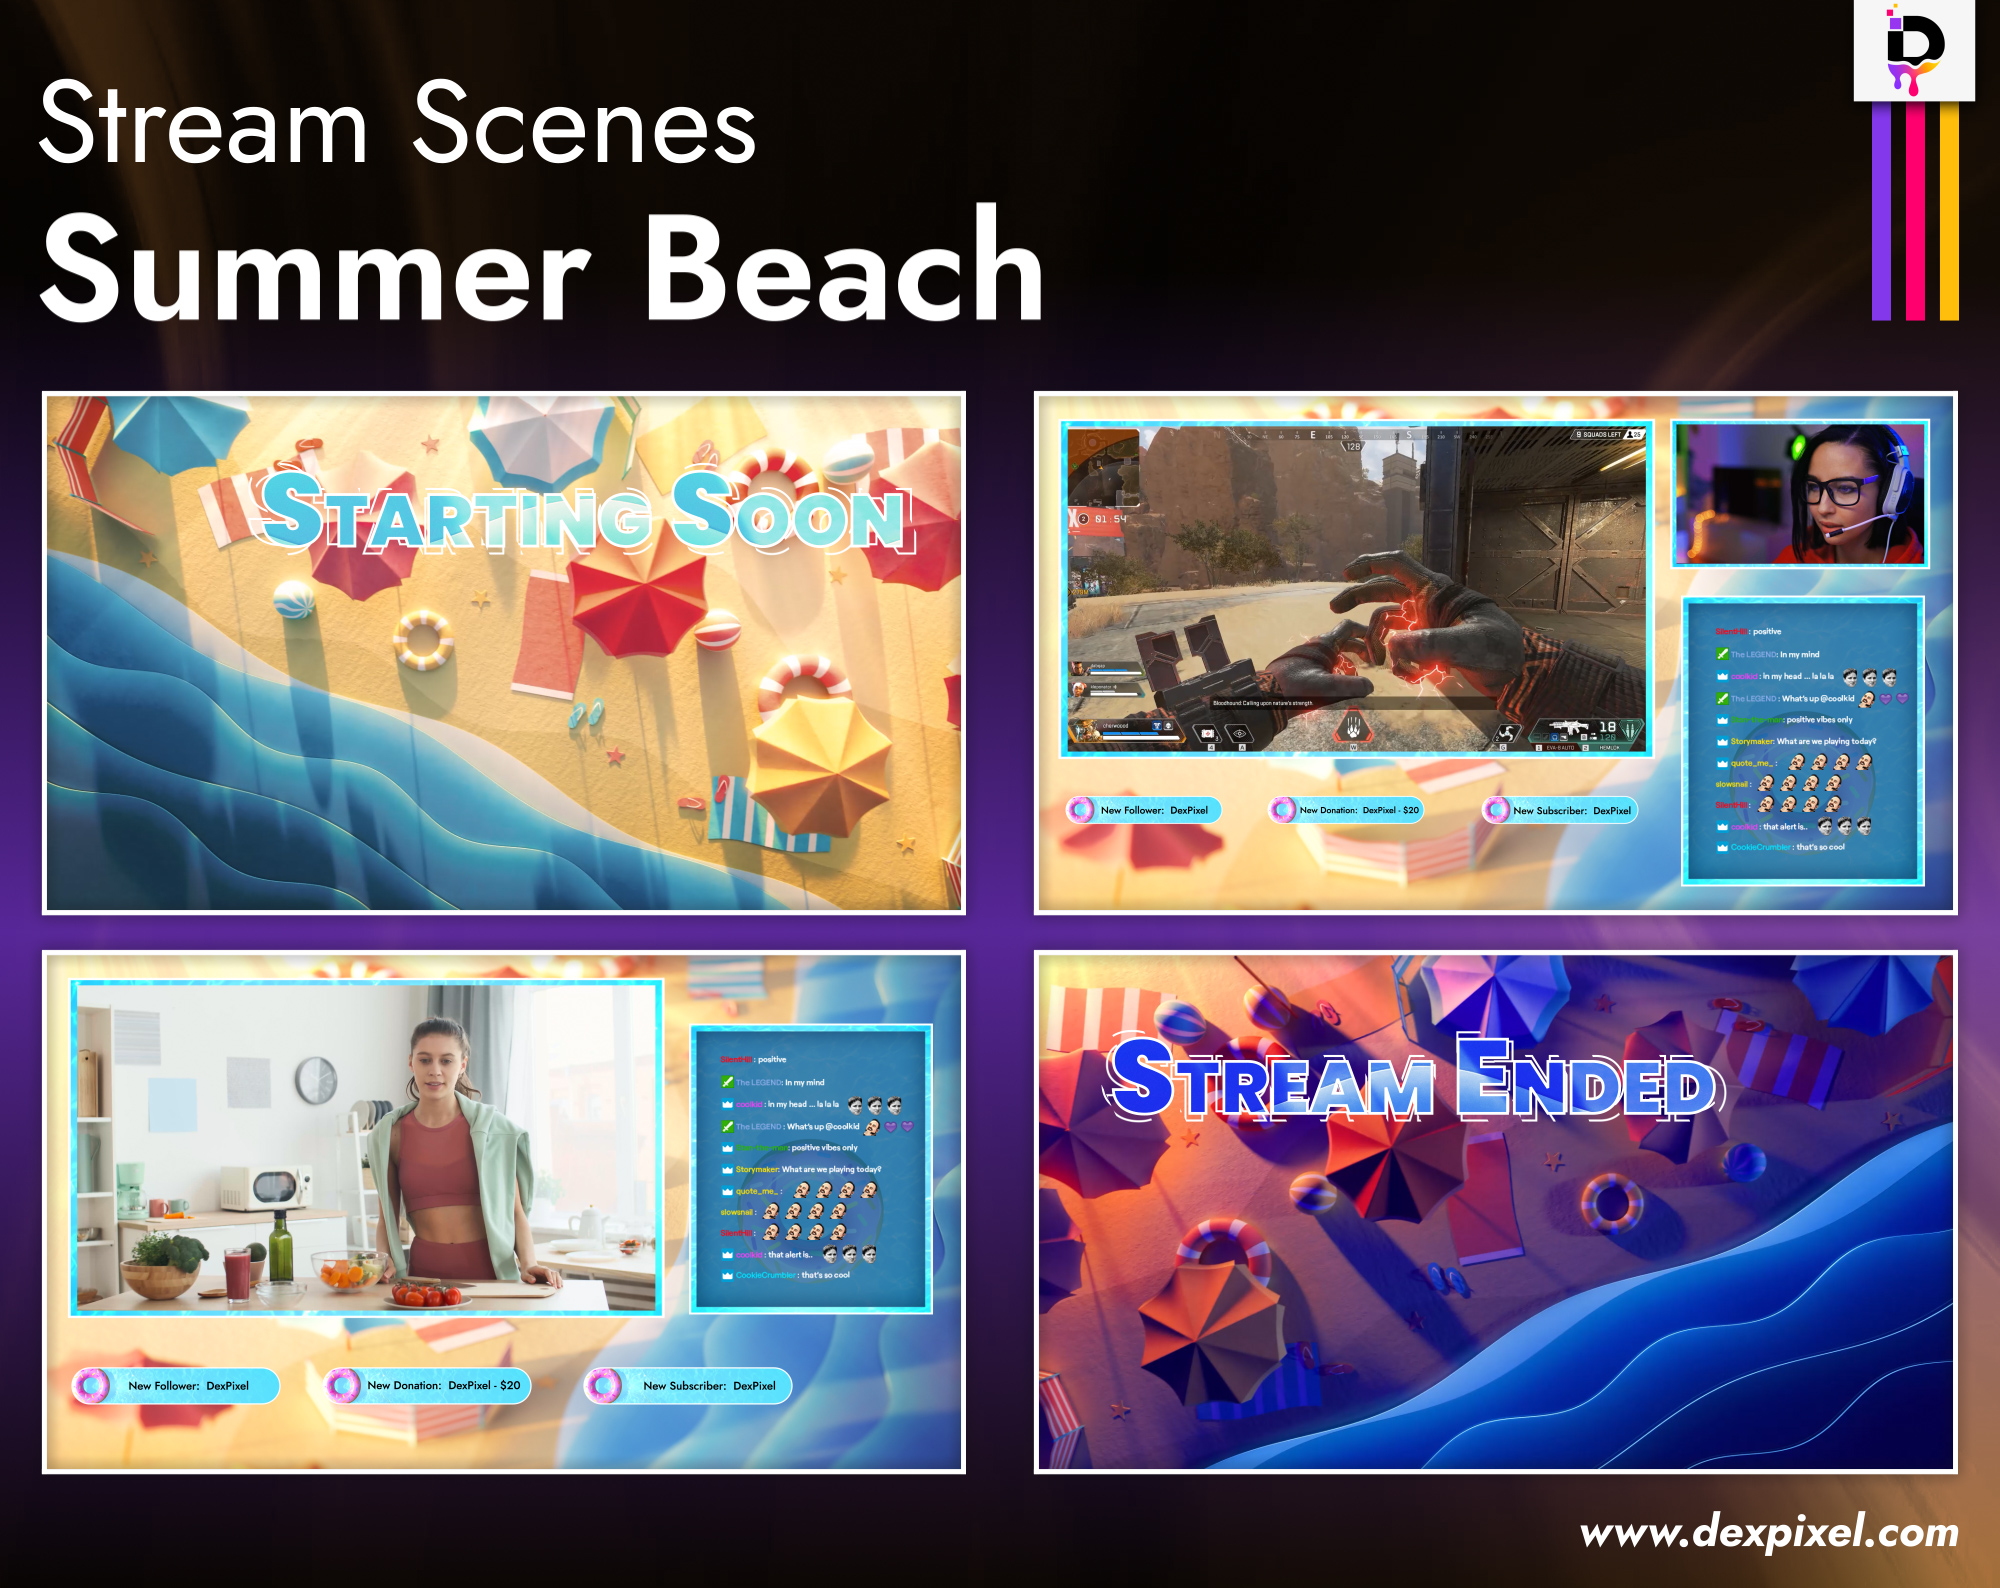 Stream Scenes Dexpixel Thumbnail Summer Beach